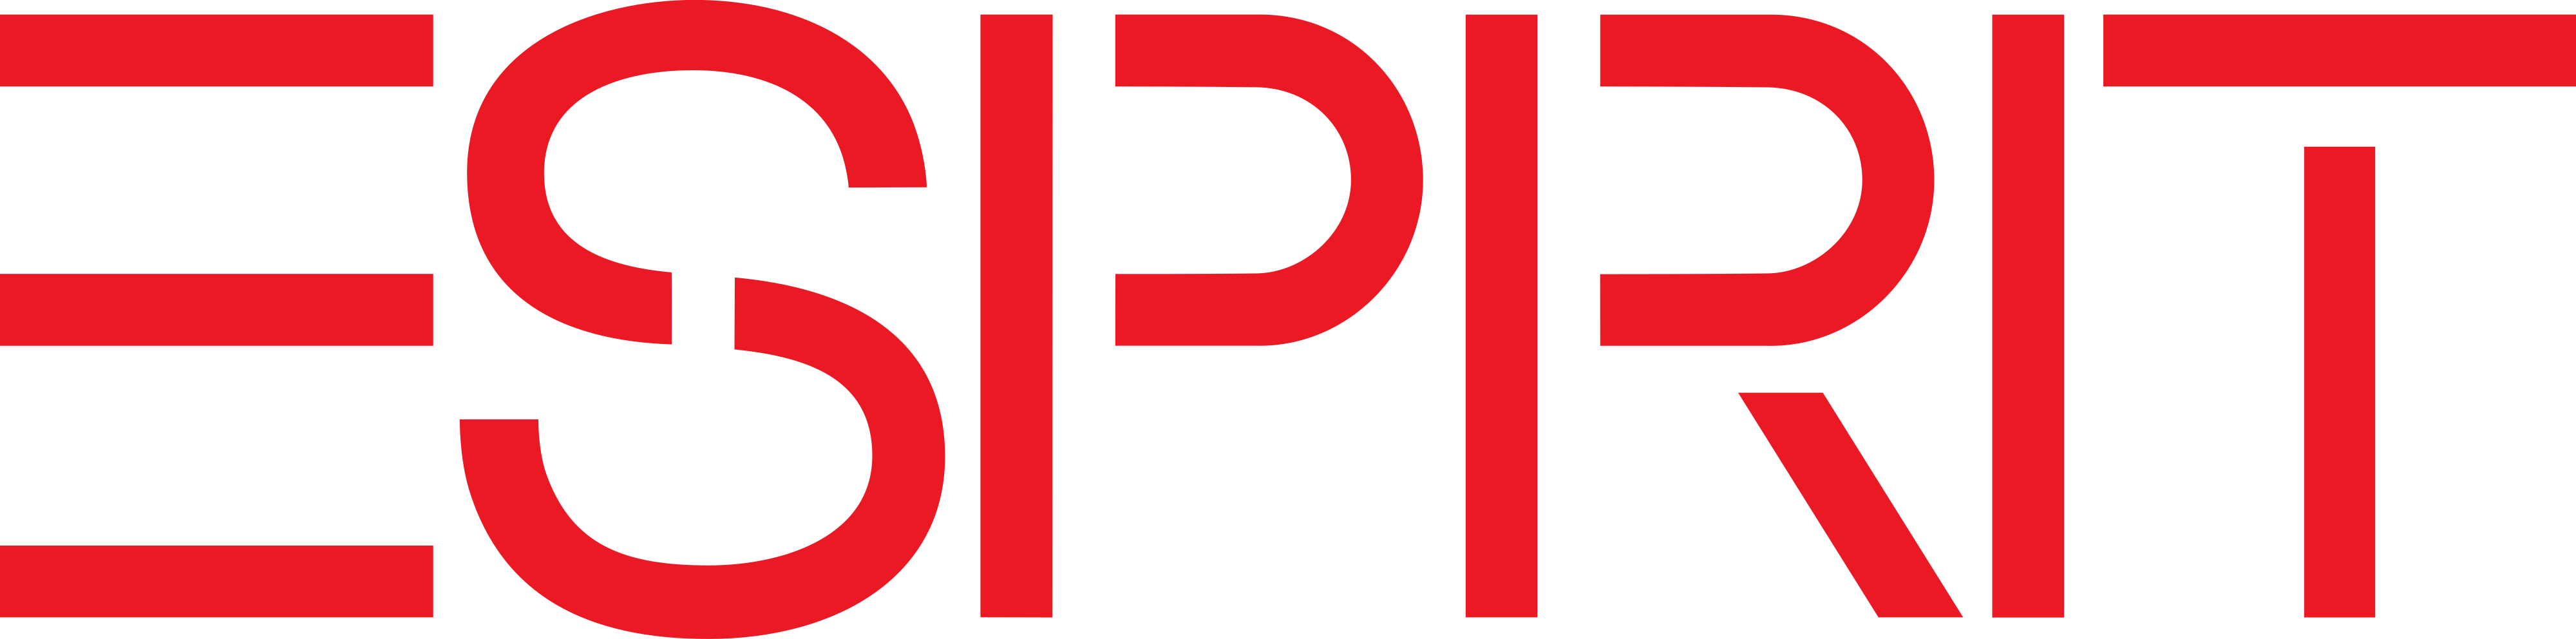 Esprit logo - download.